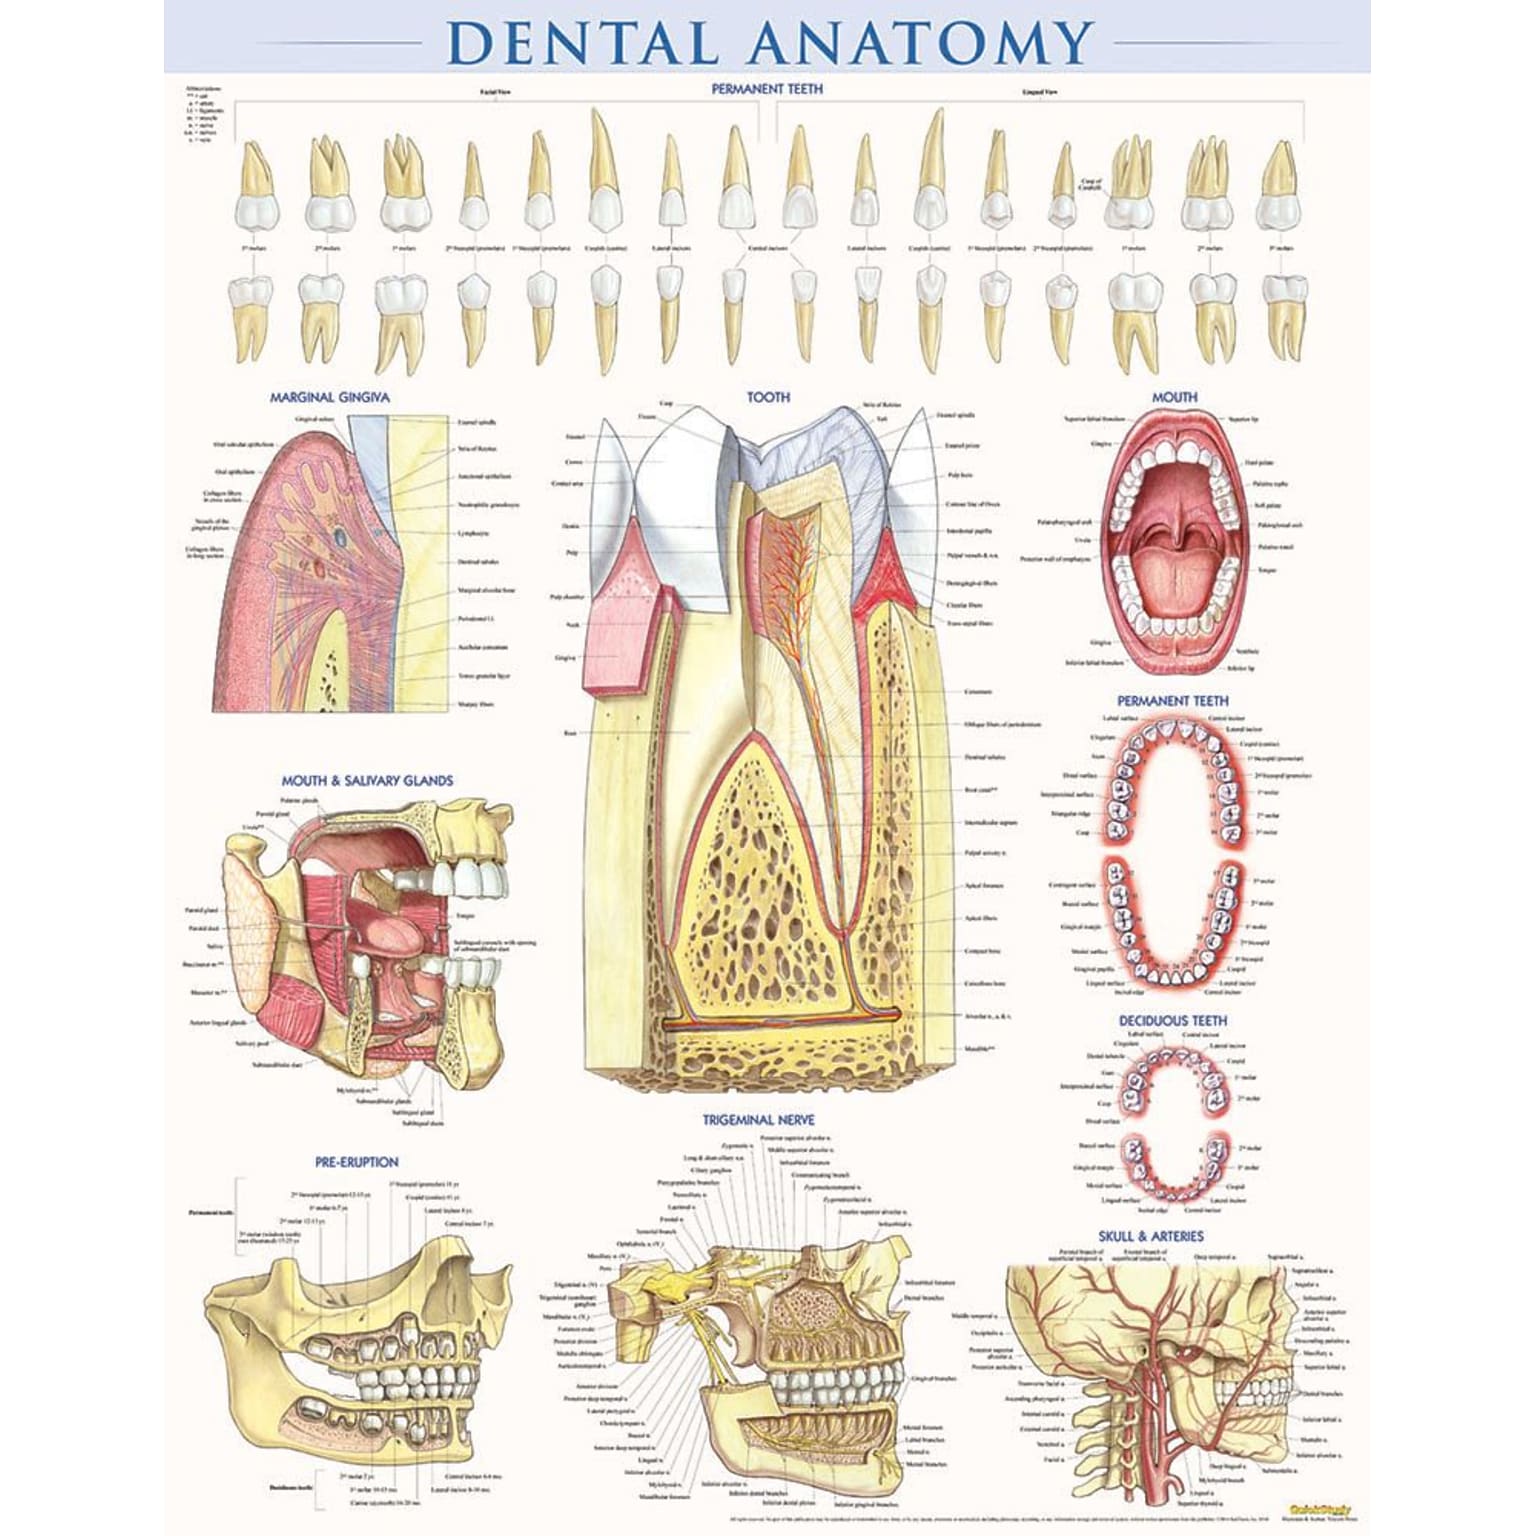 BarCharts, Inc. QuickStudy® Dental Anatomy Poster Reference Set (9781423230793)